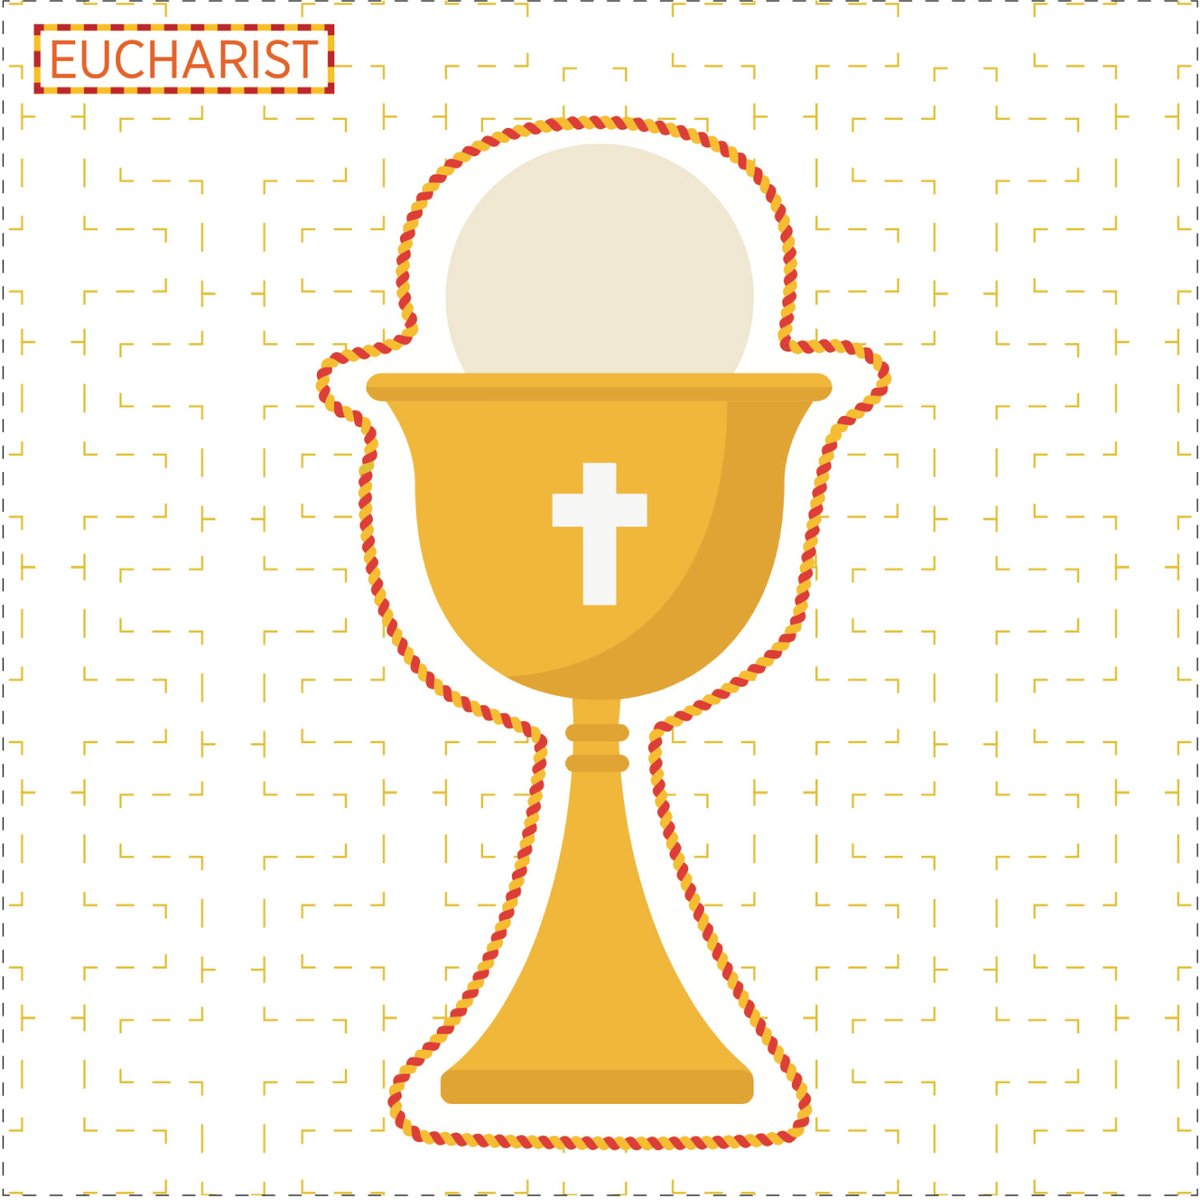 Sadlier-Sacraments-Quilt-Eucharist-3